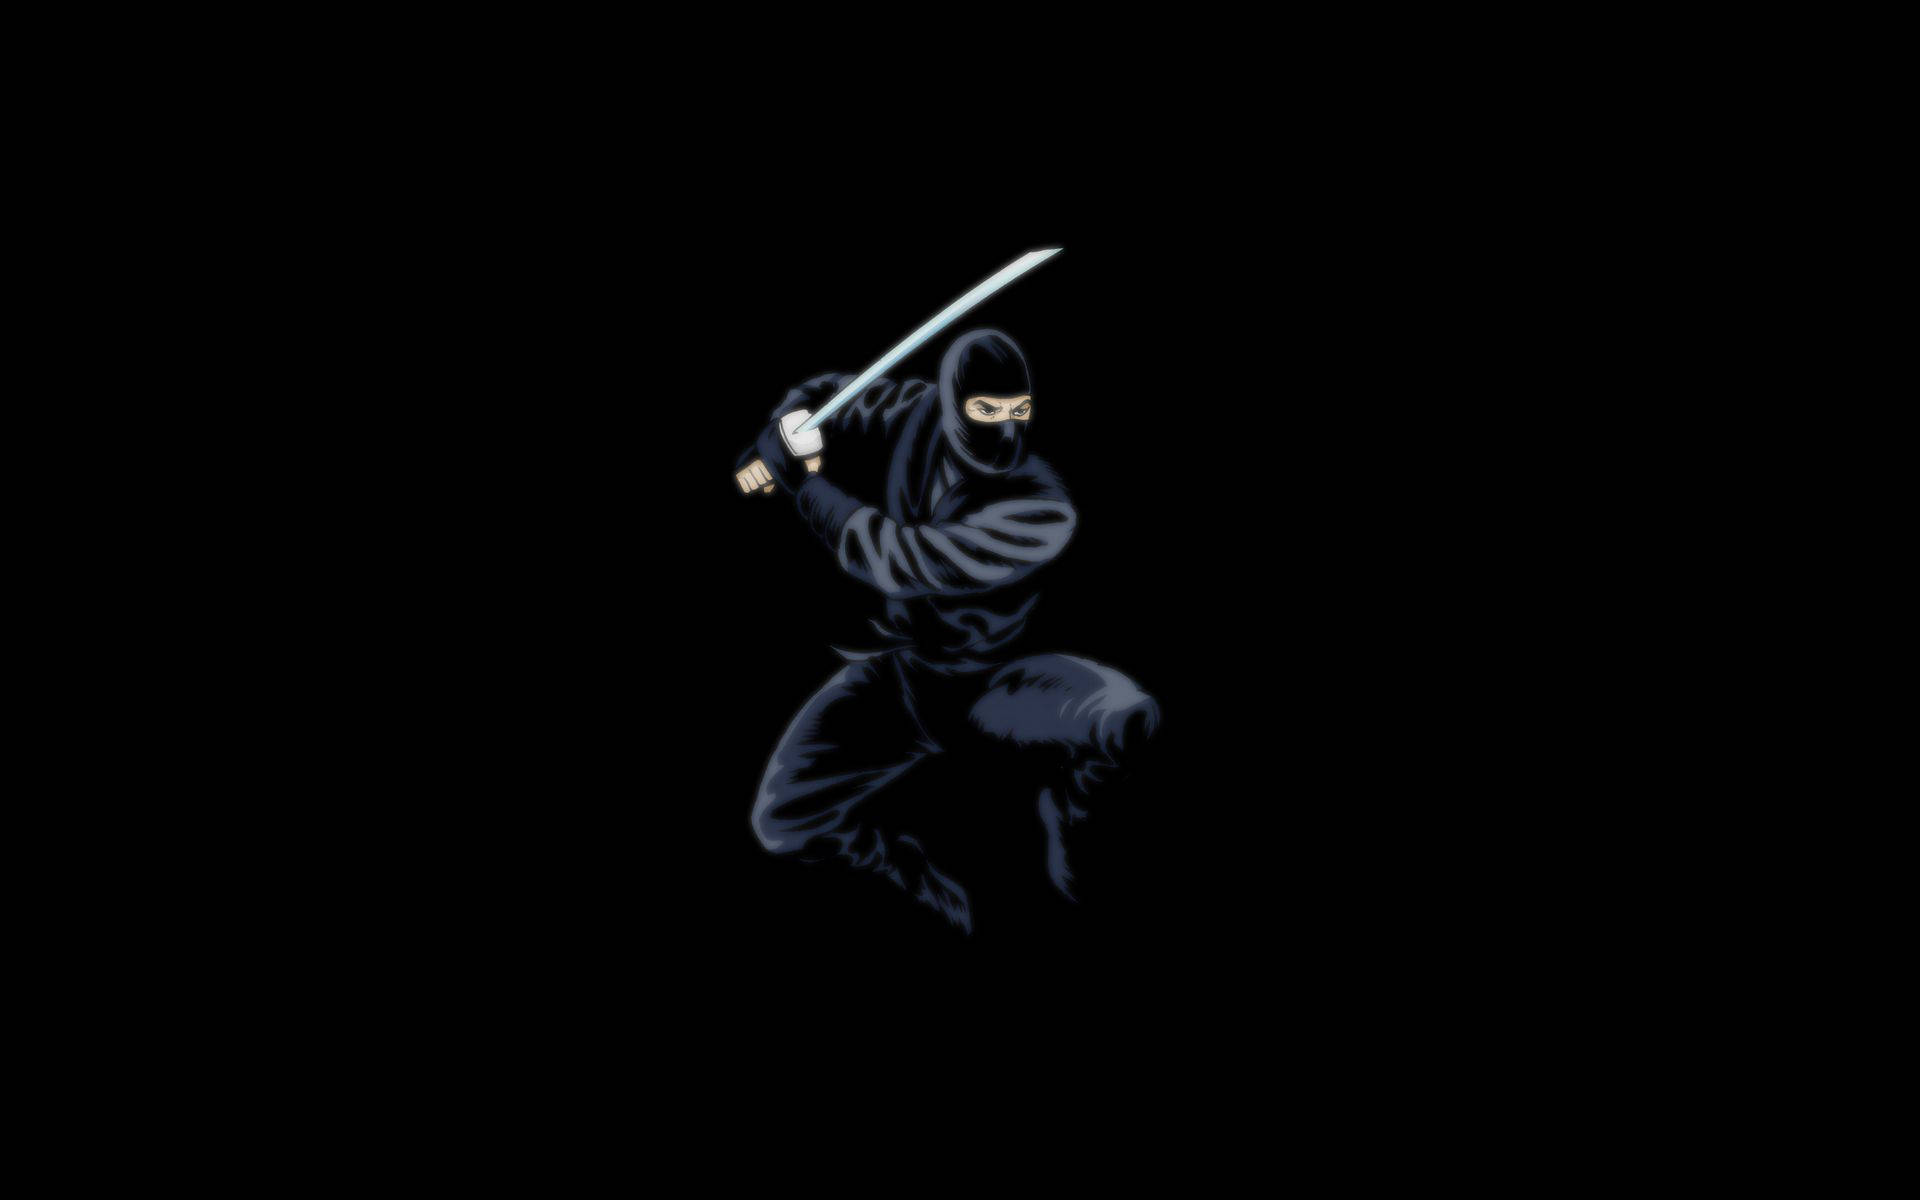 Ninja 1920X1200 Wallpaper and Background Image